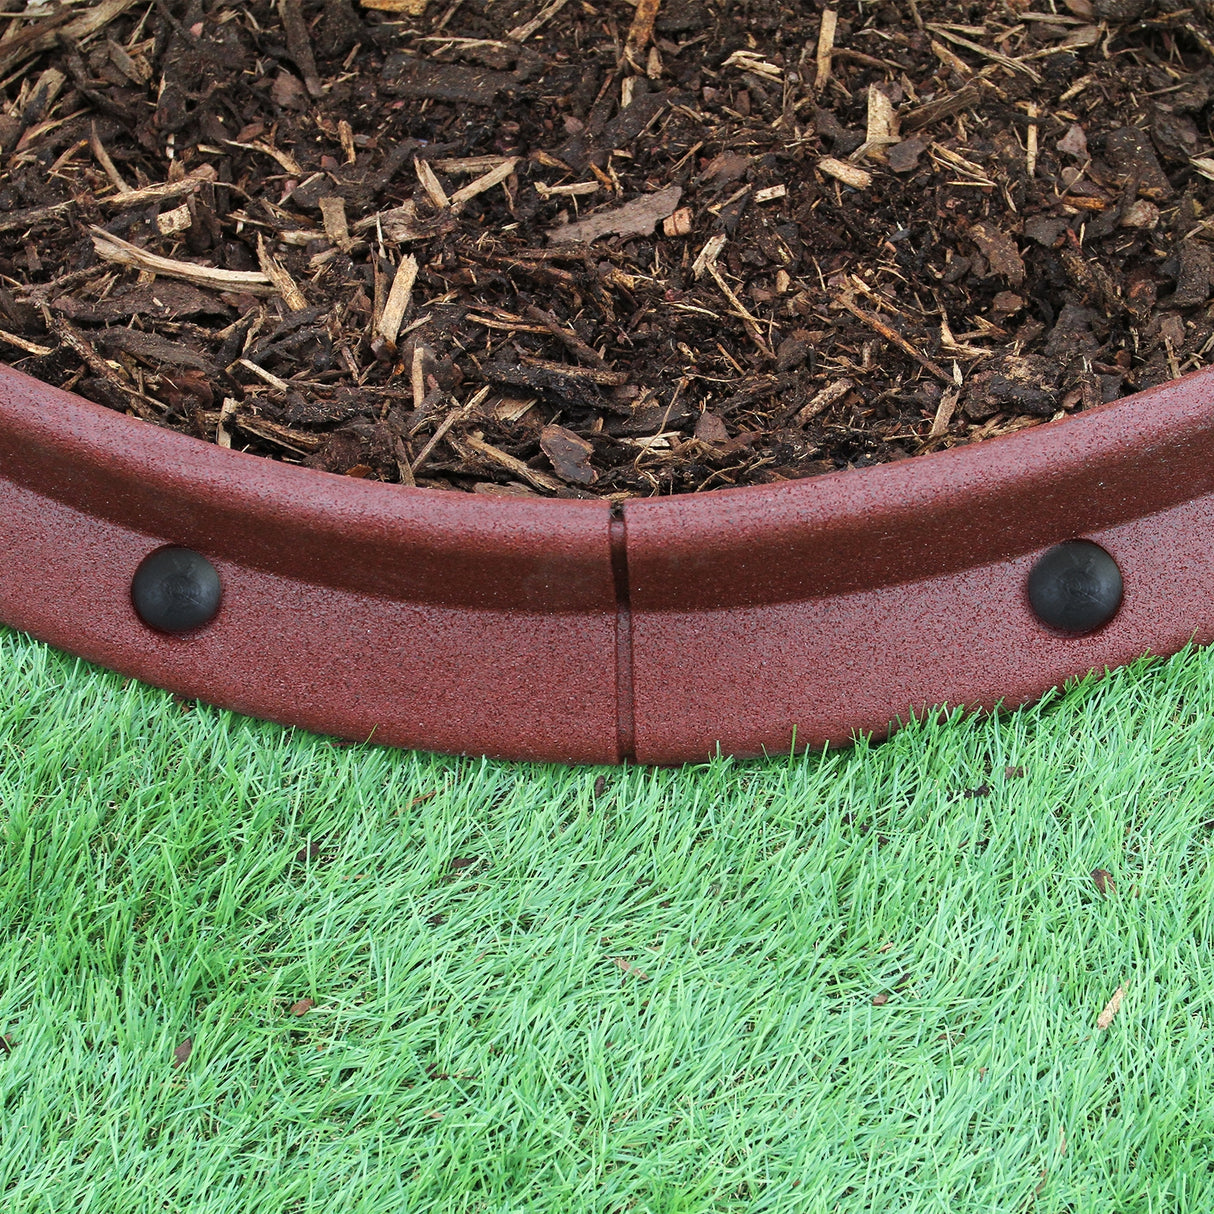 Flexible Lawn Edging Terracotta 1.2m x 28